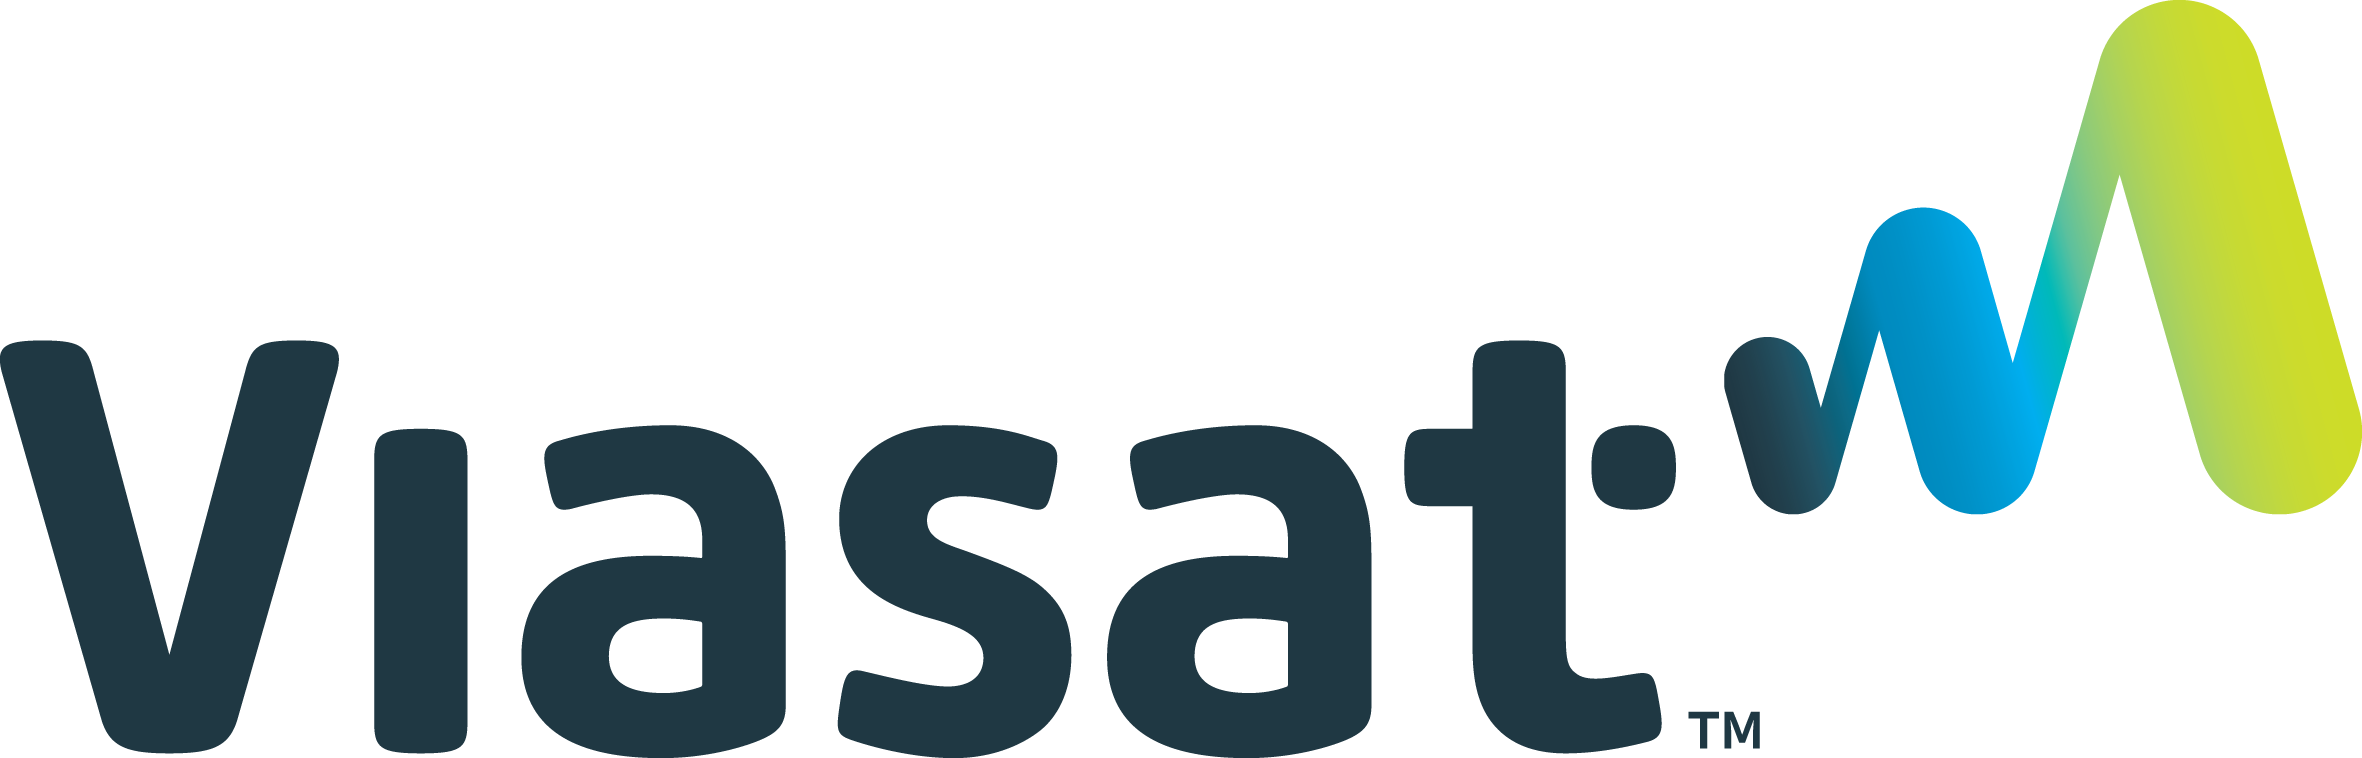 Viasat-new-logo-nov-17.png